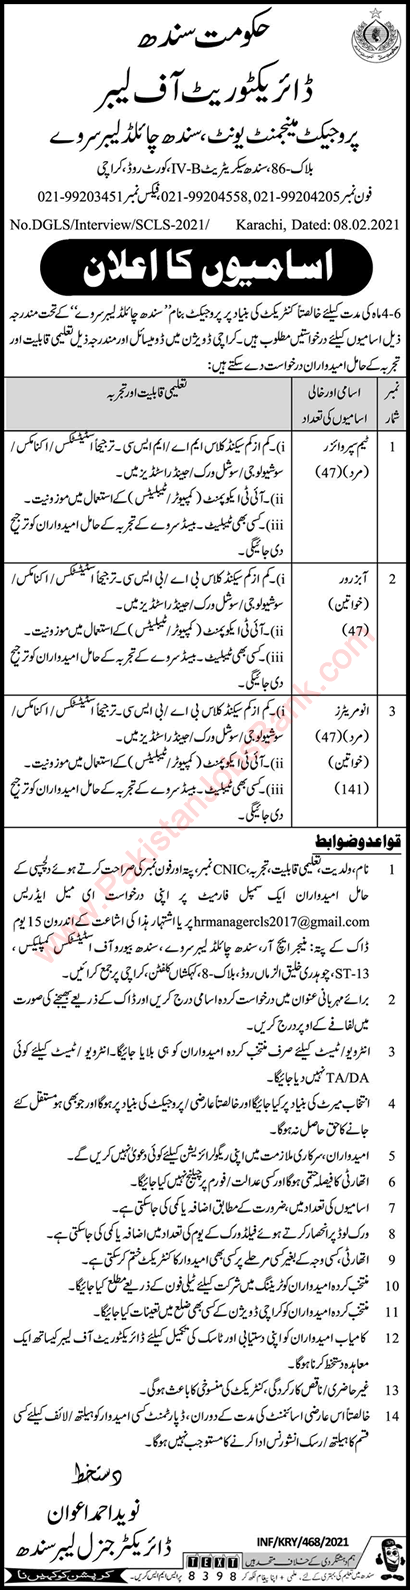 Labour Department Sindh Jobs 2021 February Enumerators, Observers & Supervisors Latest